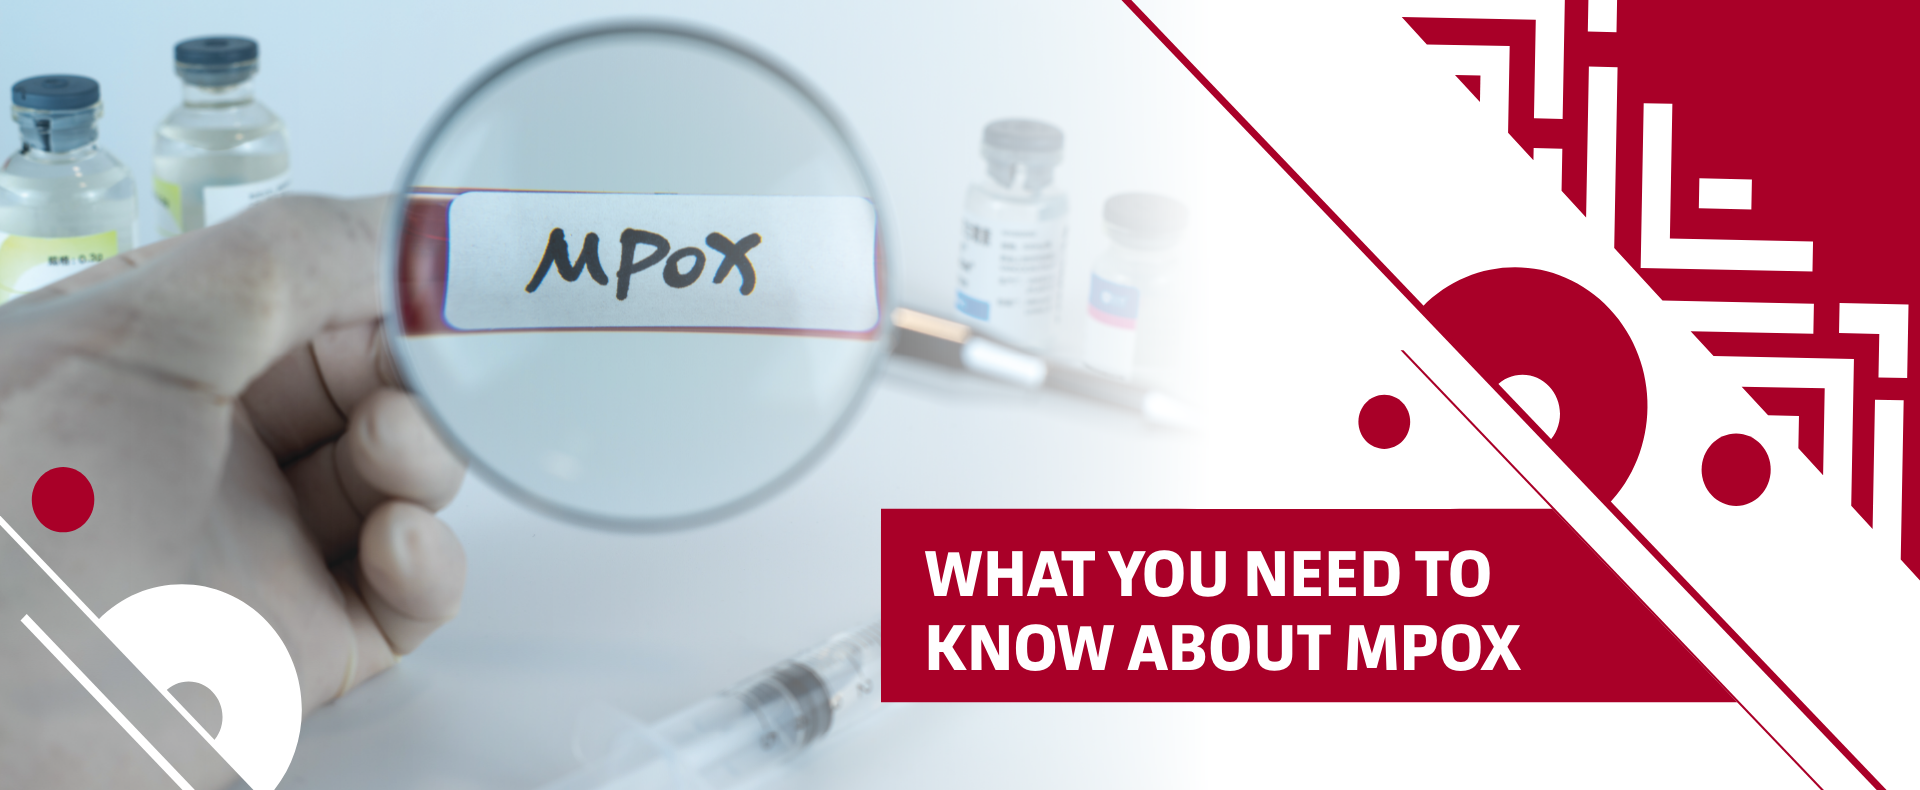 Key information about Mpox